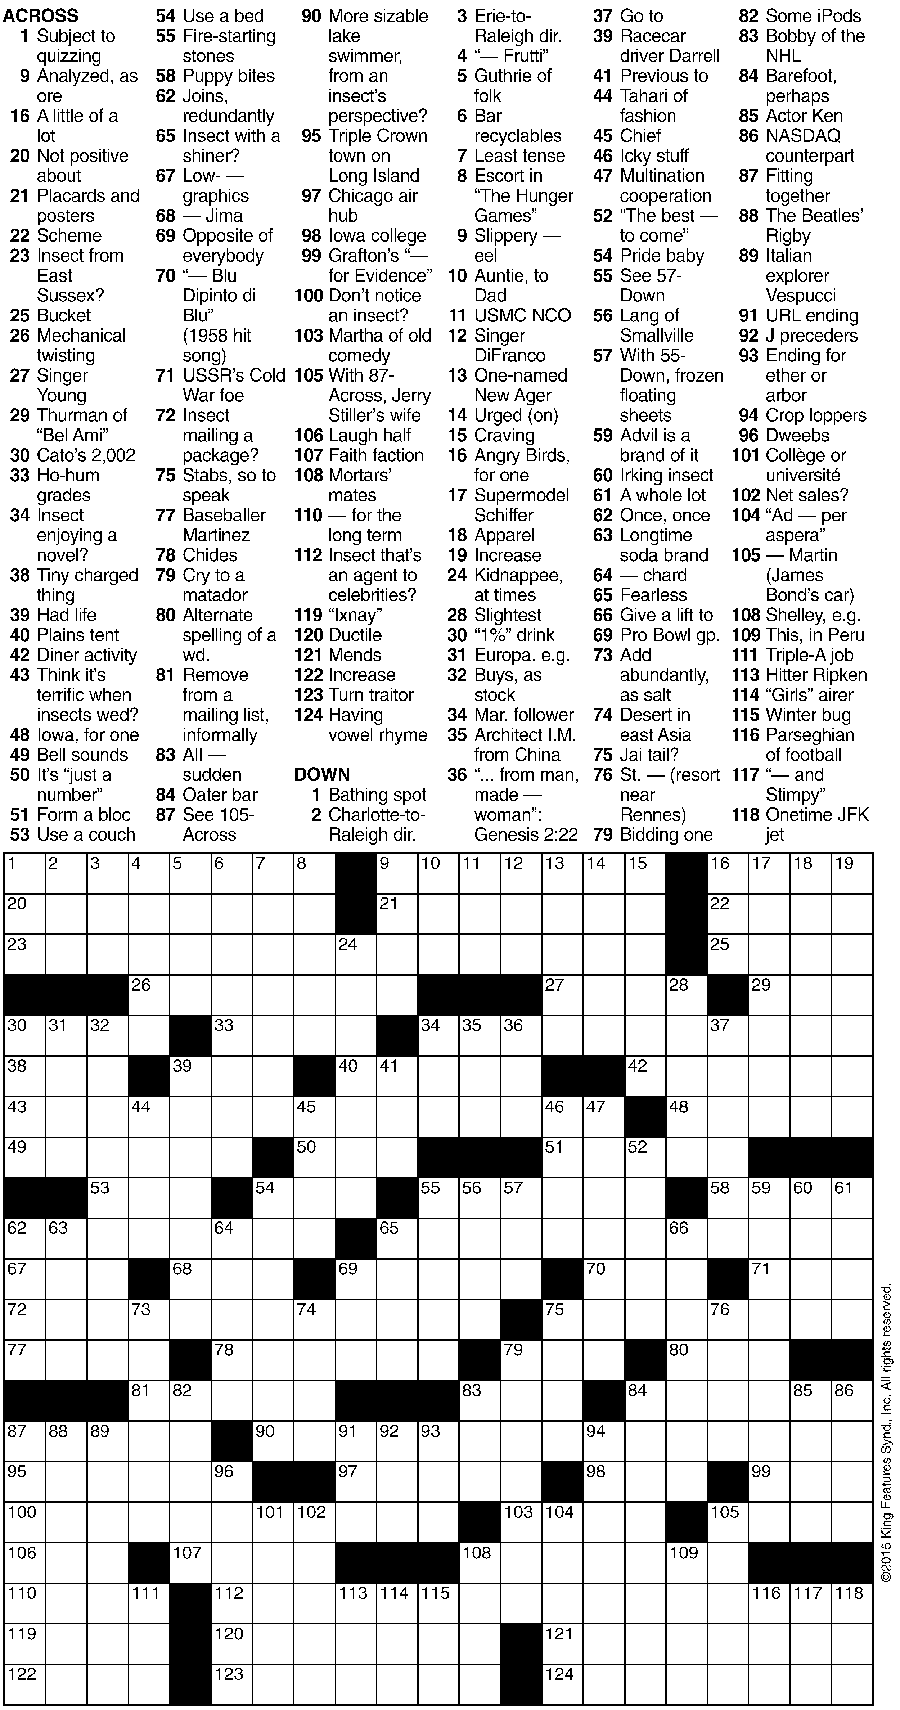 crossword1-1-84efa90c6c6fb817.png